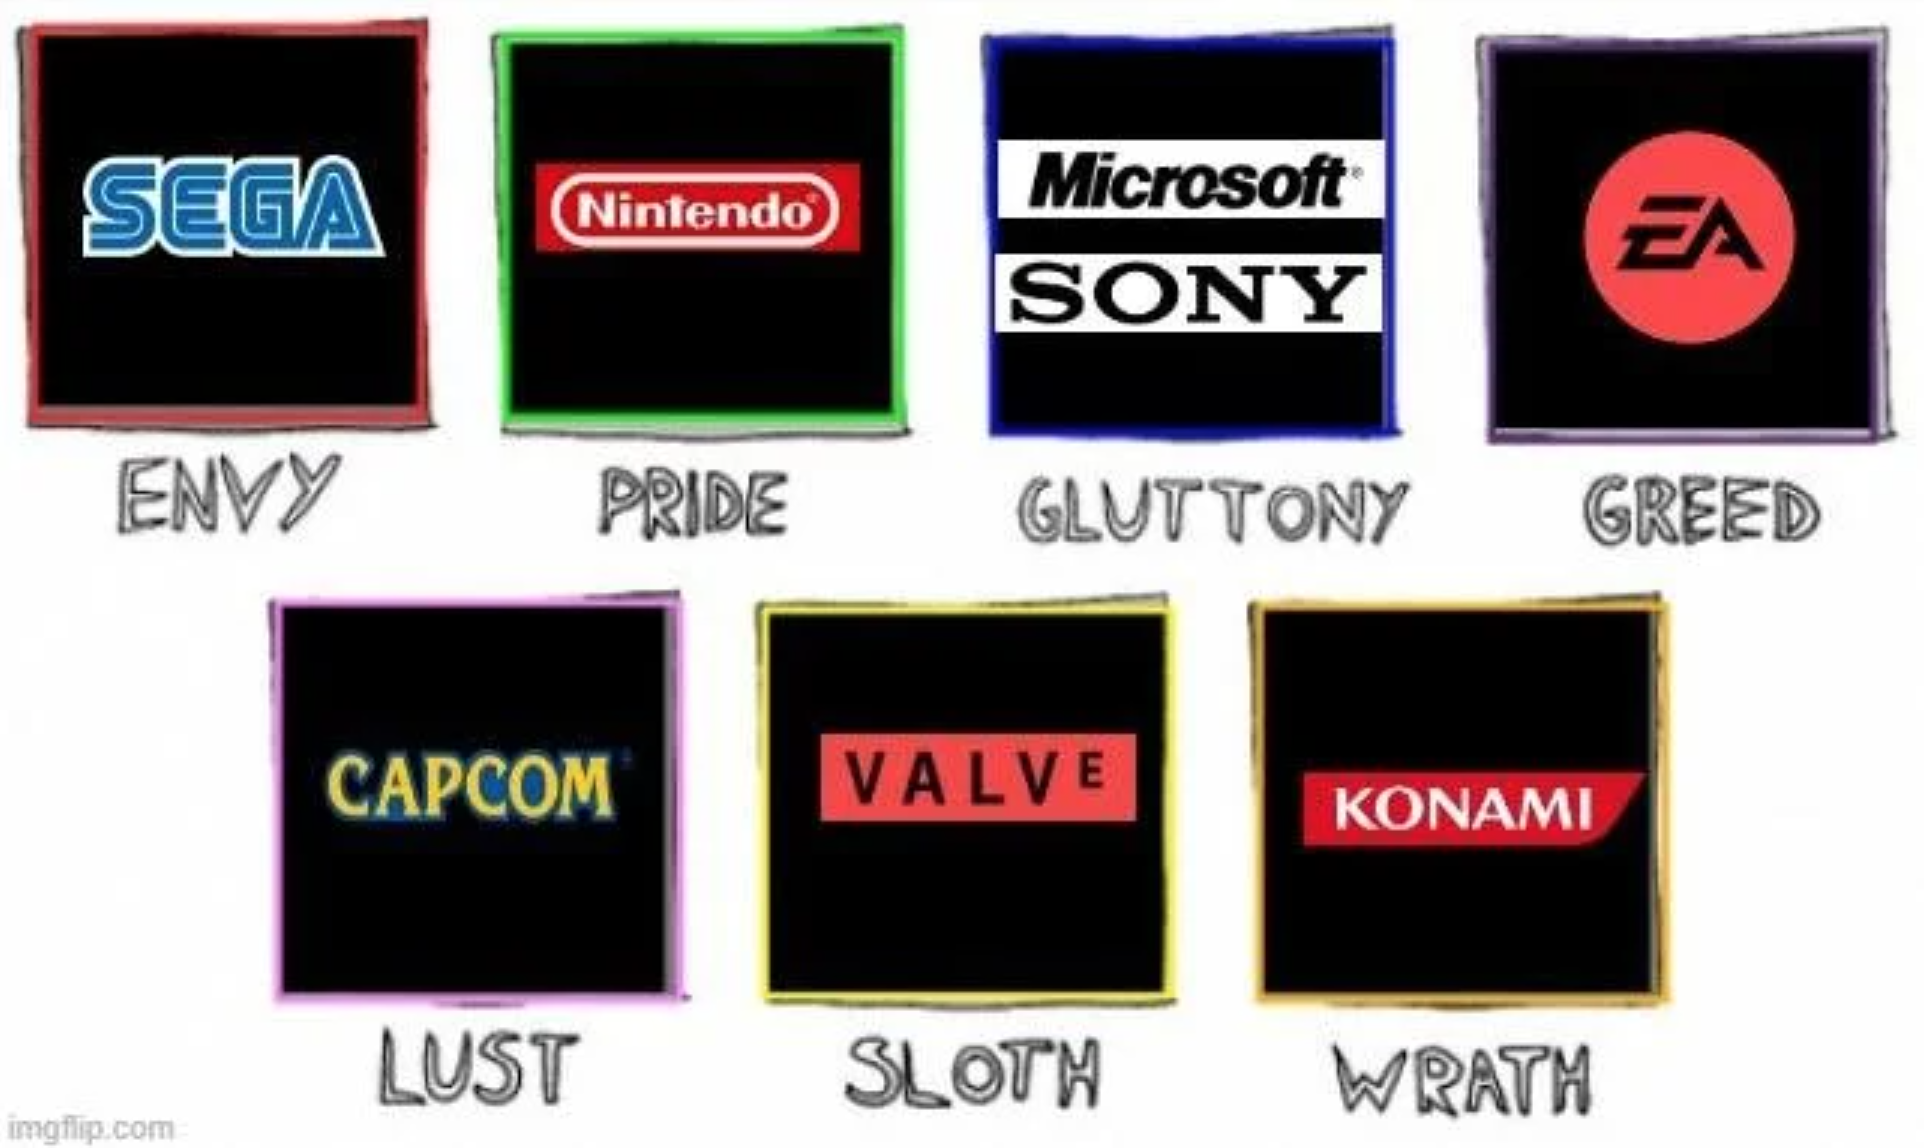 funny gaming memes - signage - Sega Nintendo Microsoft Sony Ea Envy Pride Gluttony Greed Capcom Valve Konami Lust Sloth Wrath imgflip.com